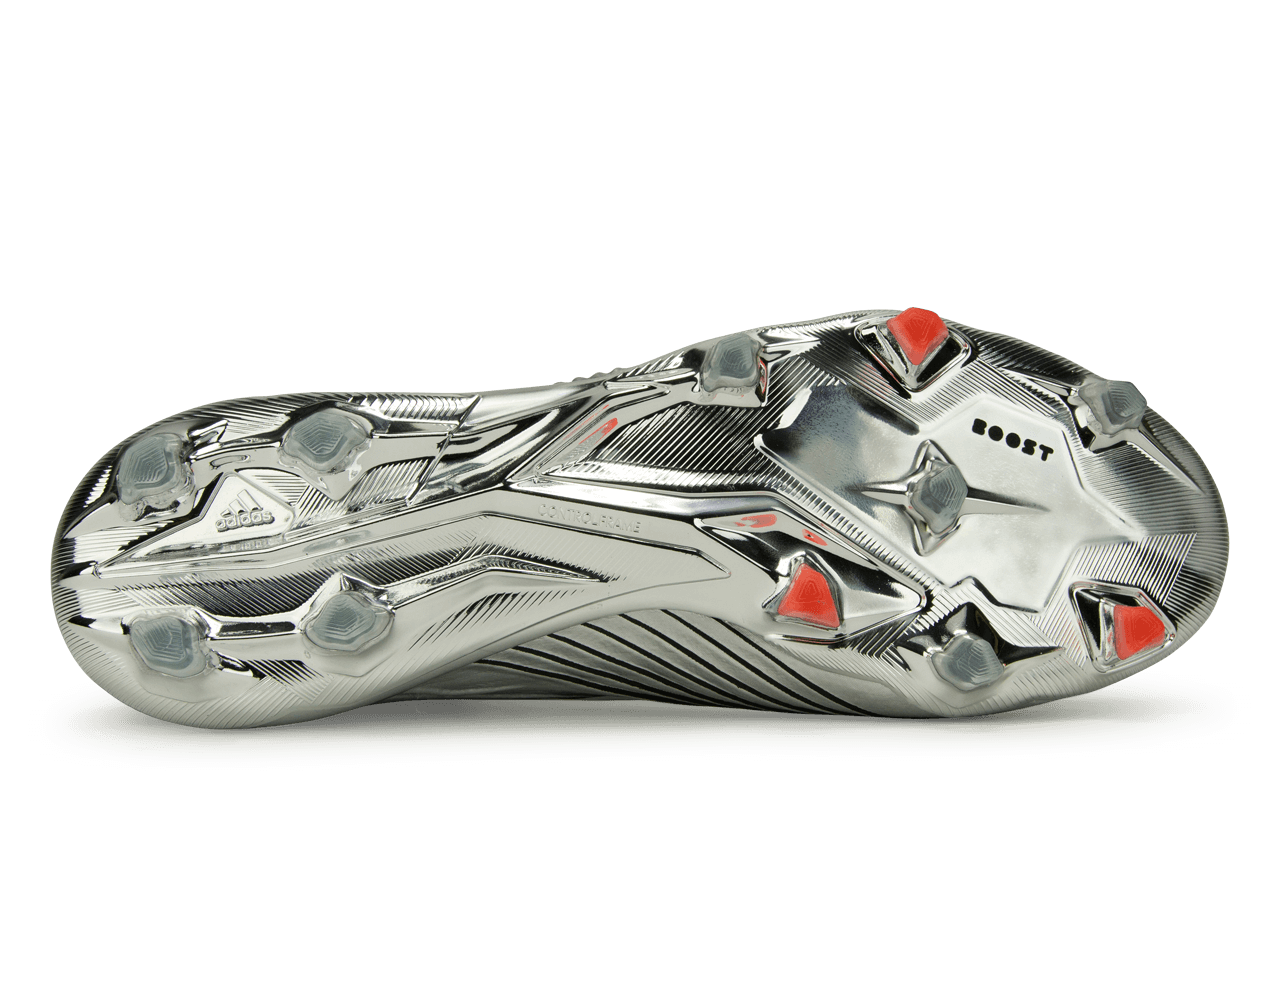 adidas Men's Predator 19+ FG Silver Metallic/Core Black